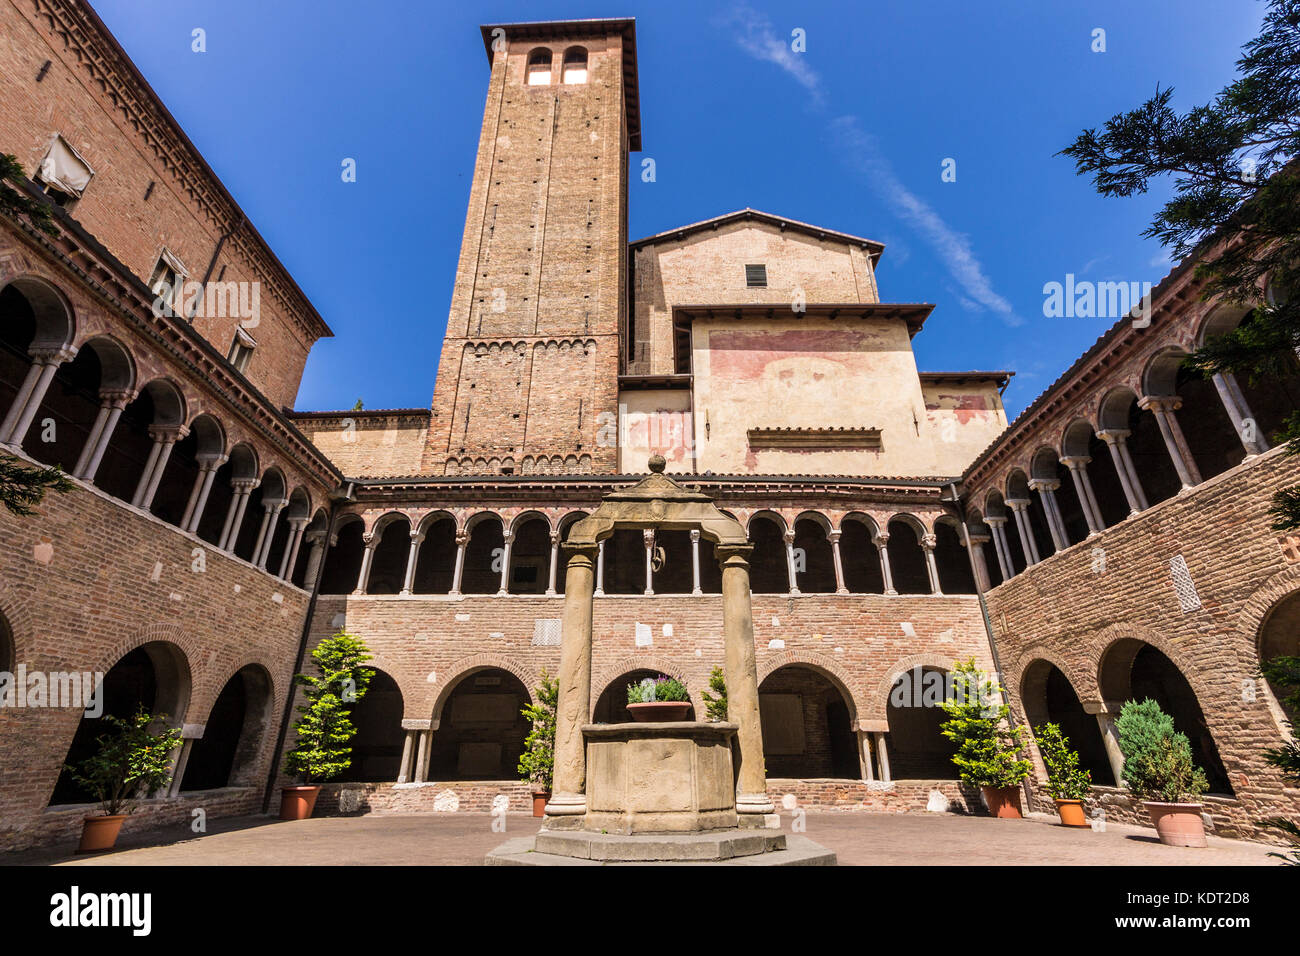 The Basilica Di Santo Stefano And The Sette Chiese In Bologna Italy Stock Photo Alamy